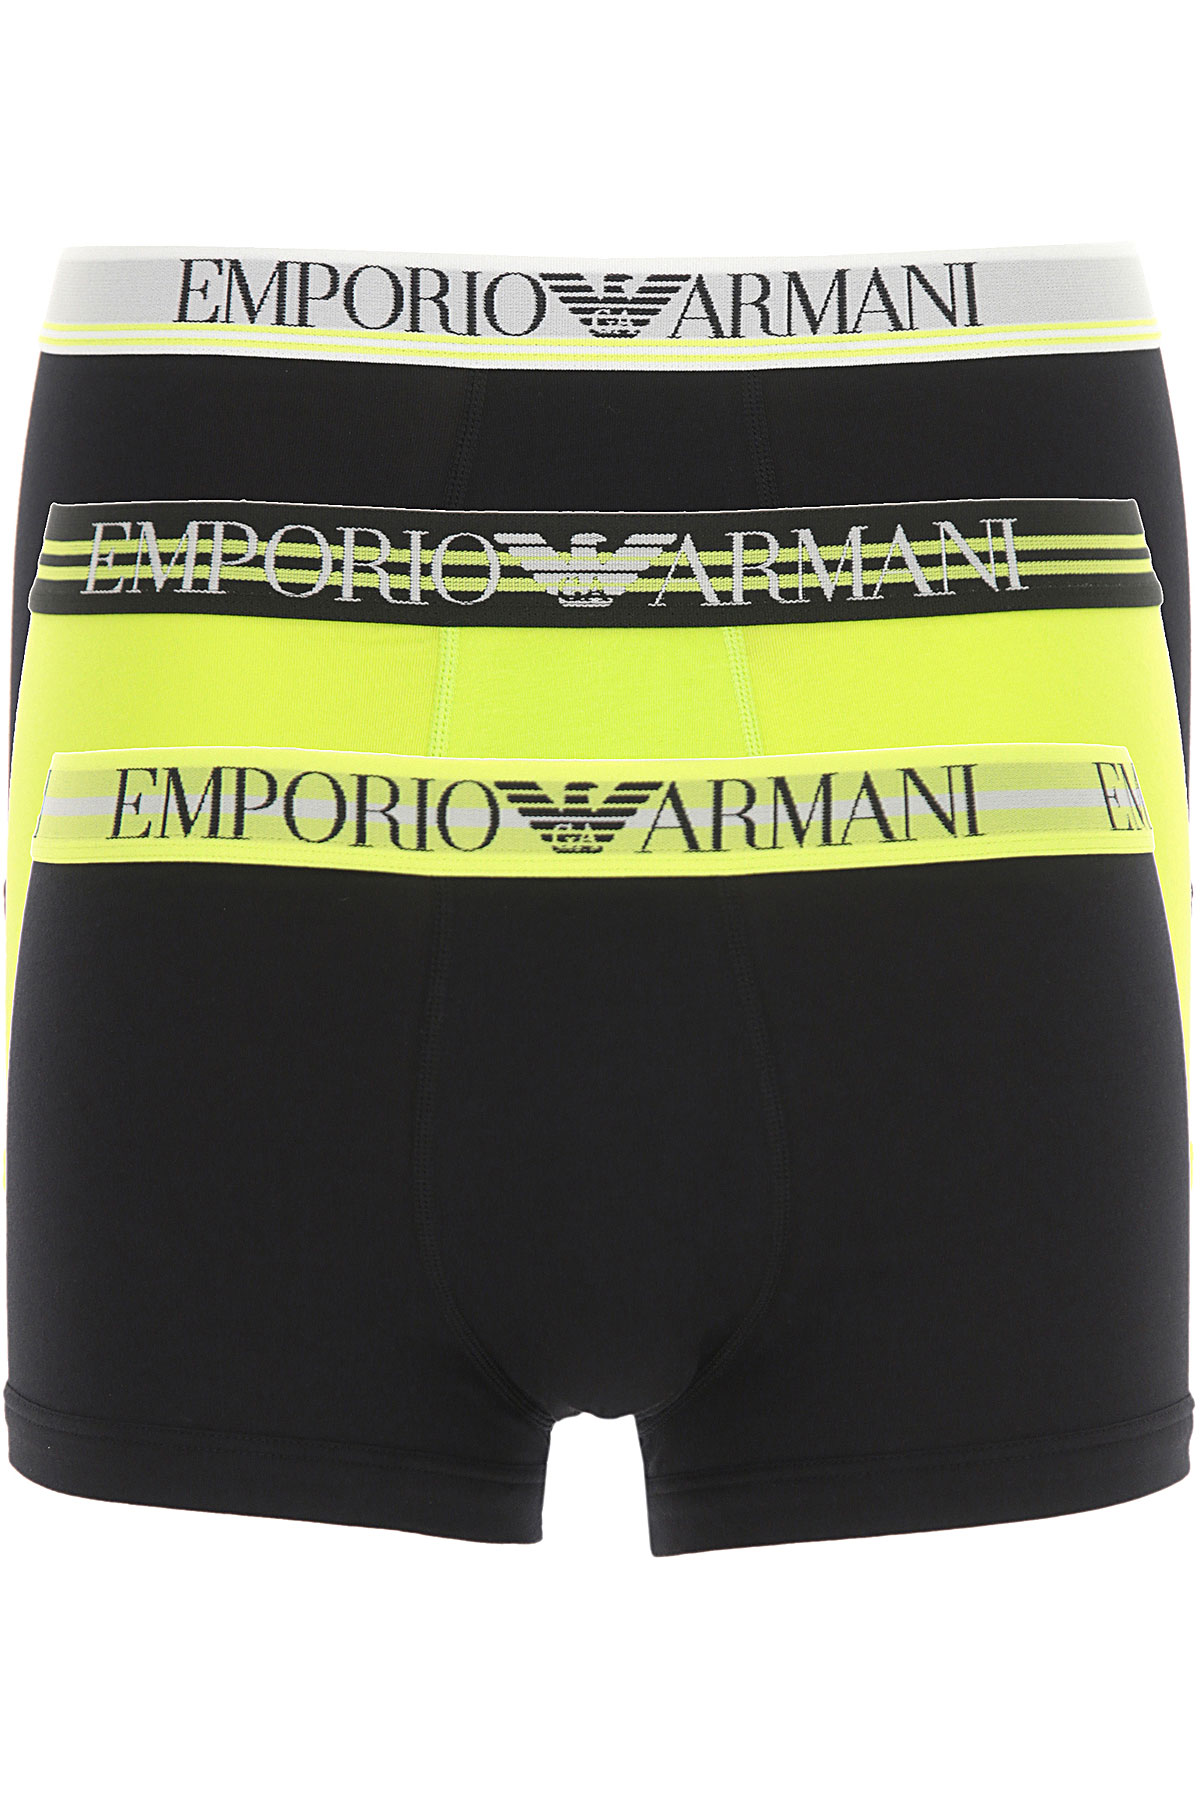 Mens Underwear Emporio Armani, Style code: 111357-1p723-69820